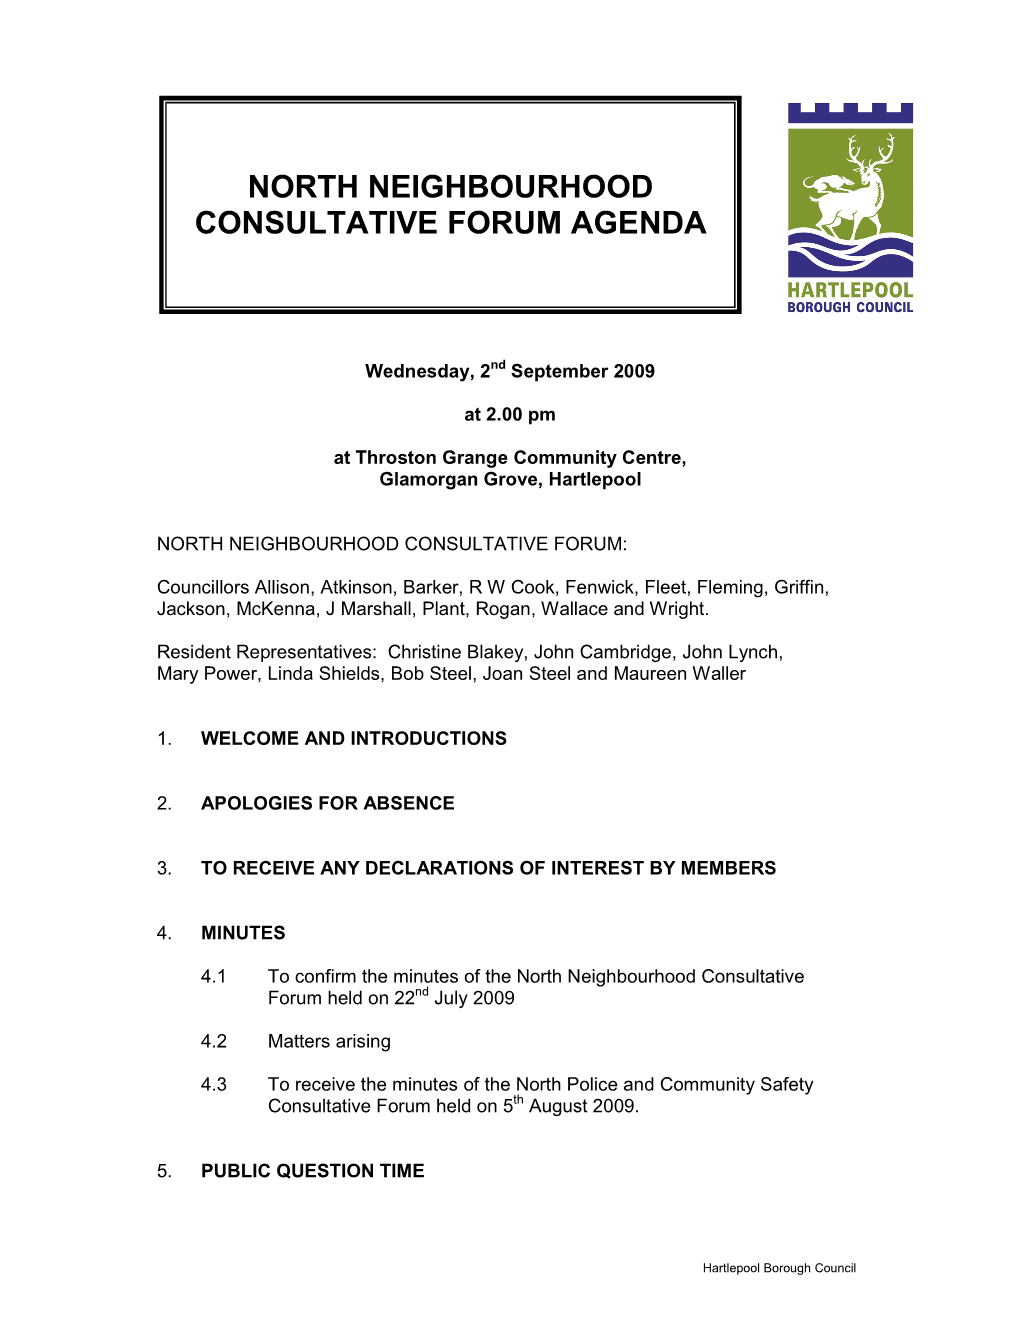 North Neighbourhood Consultative Forum Agenda